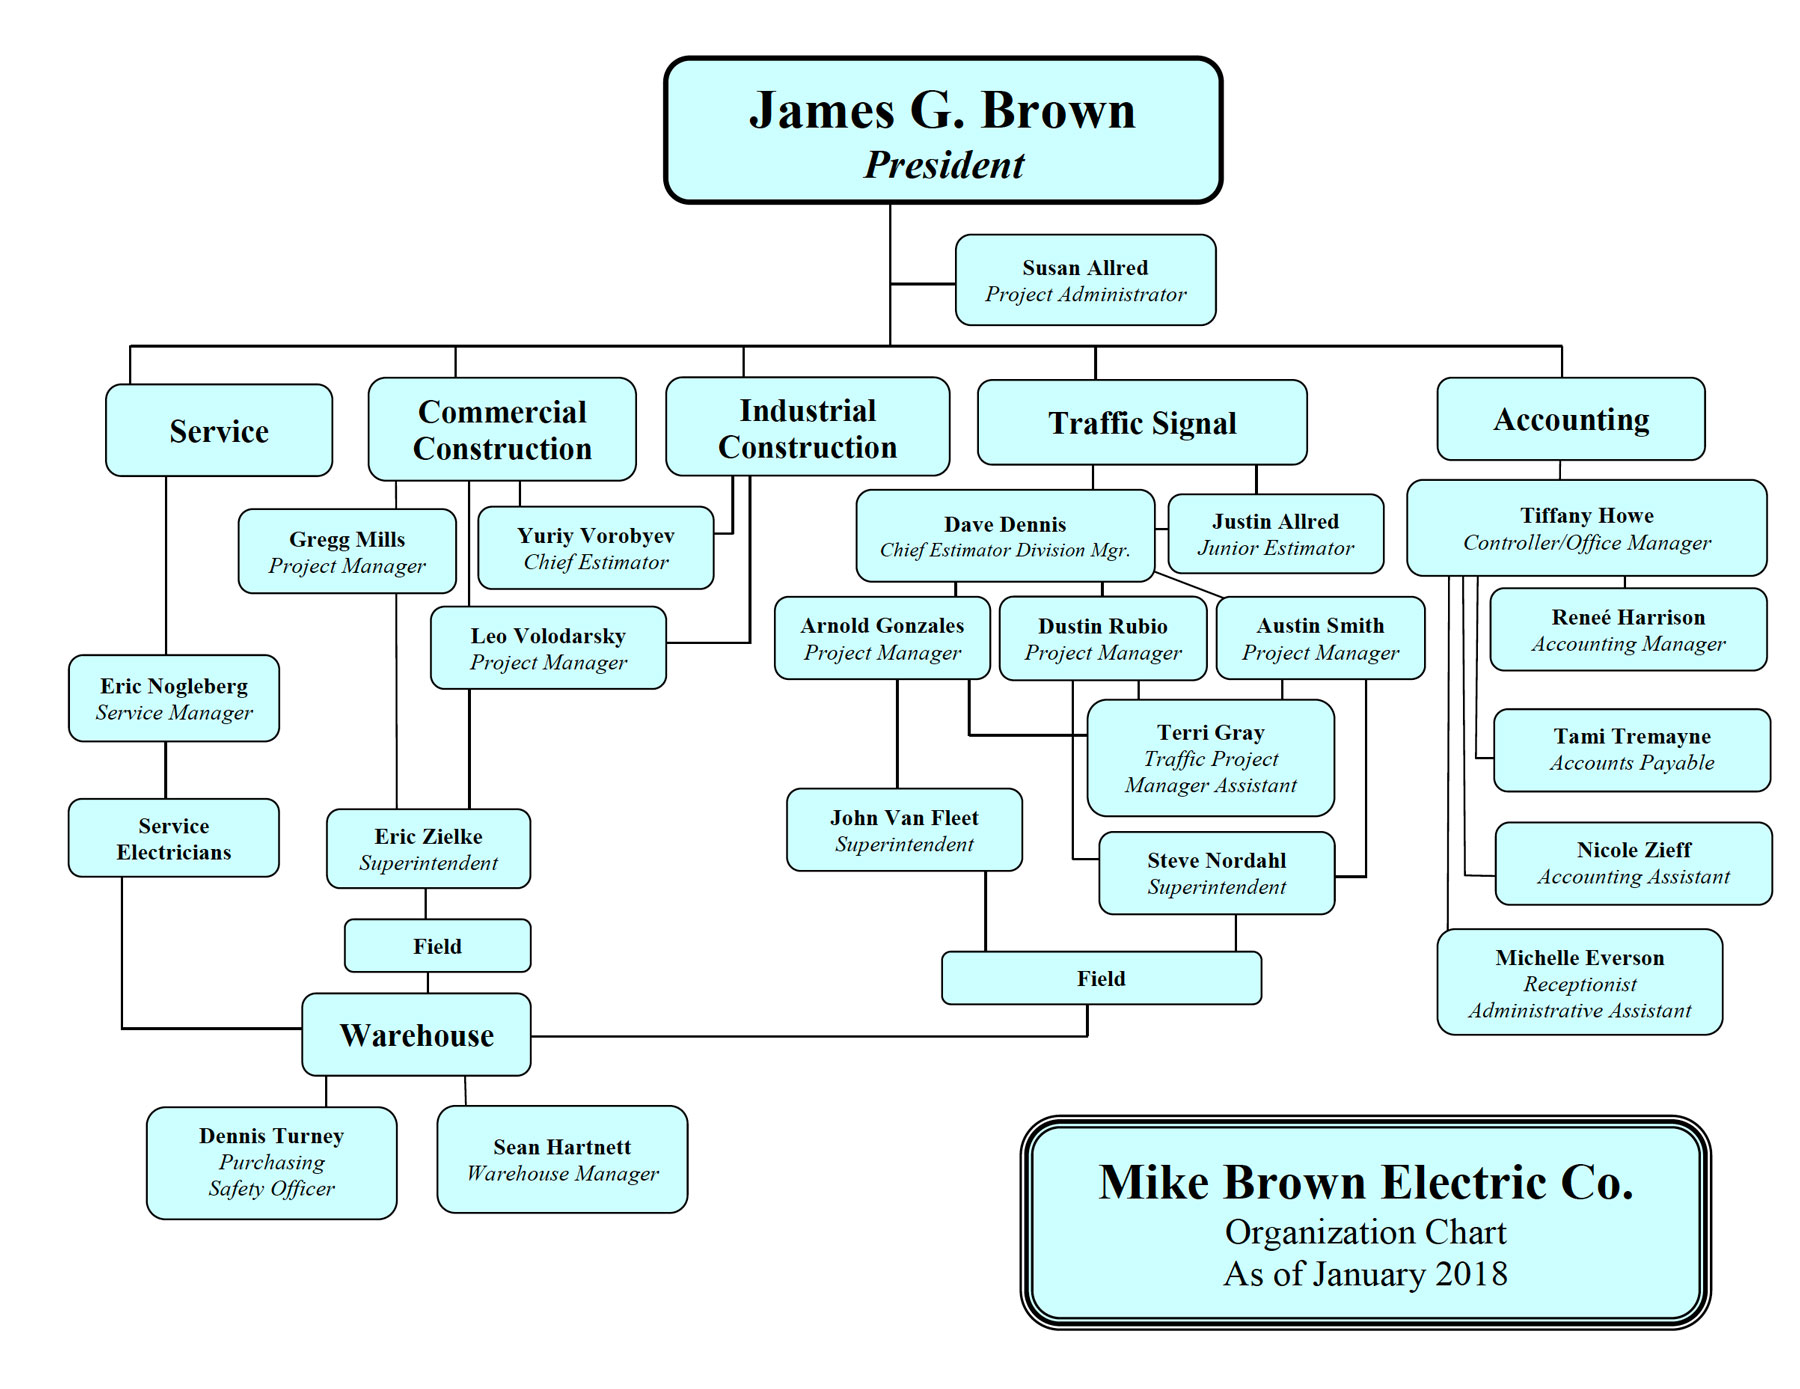 Organizational Chart MB Electric